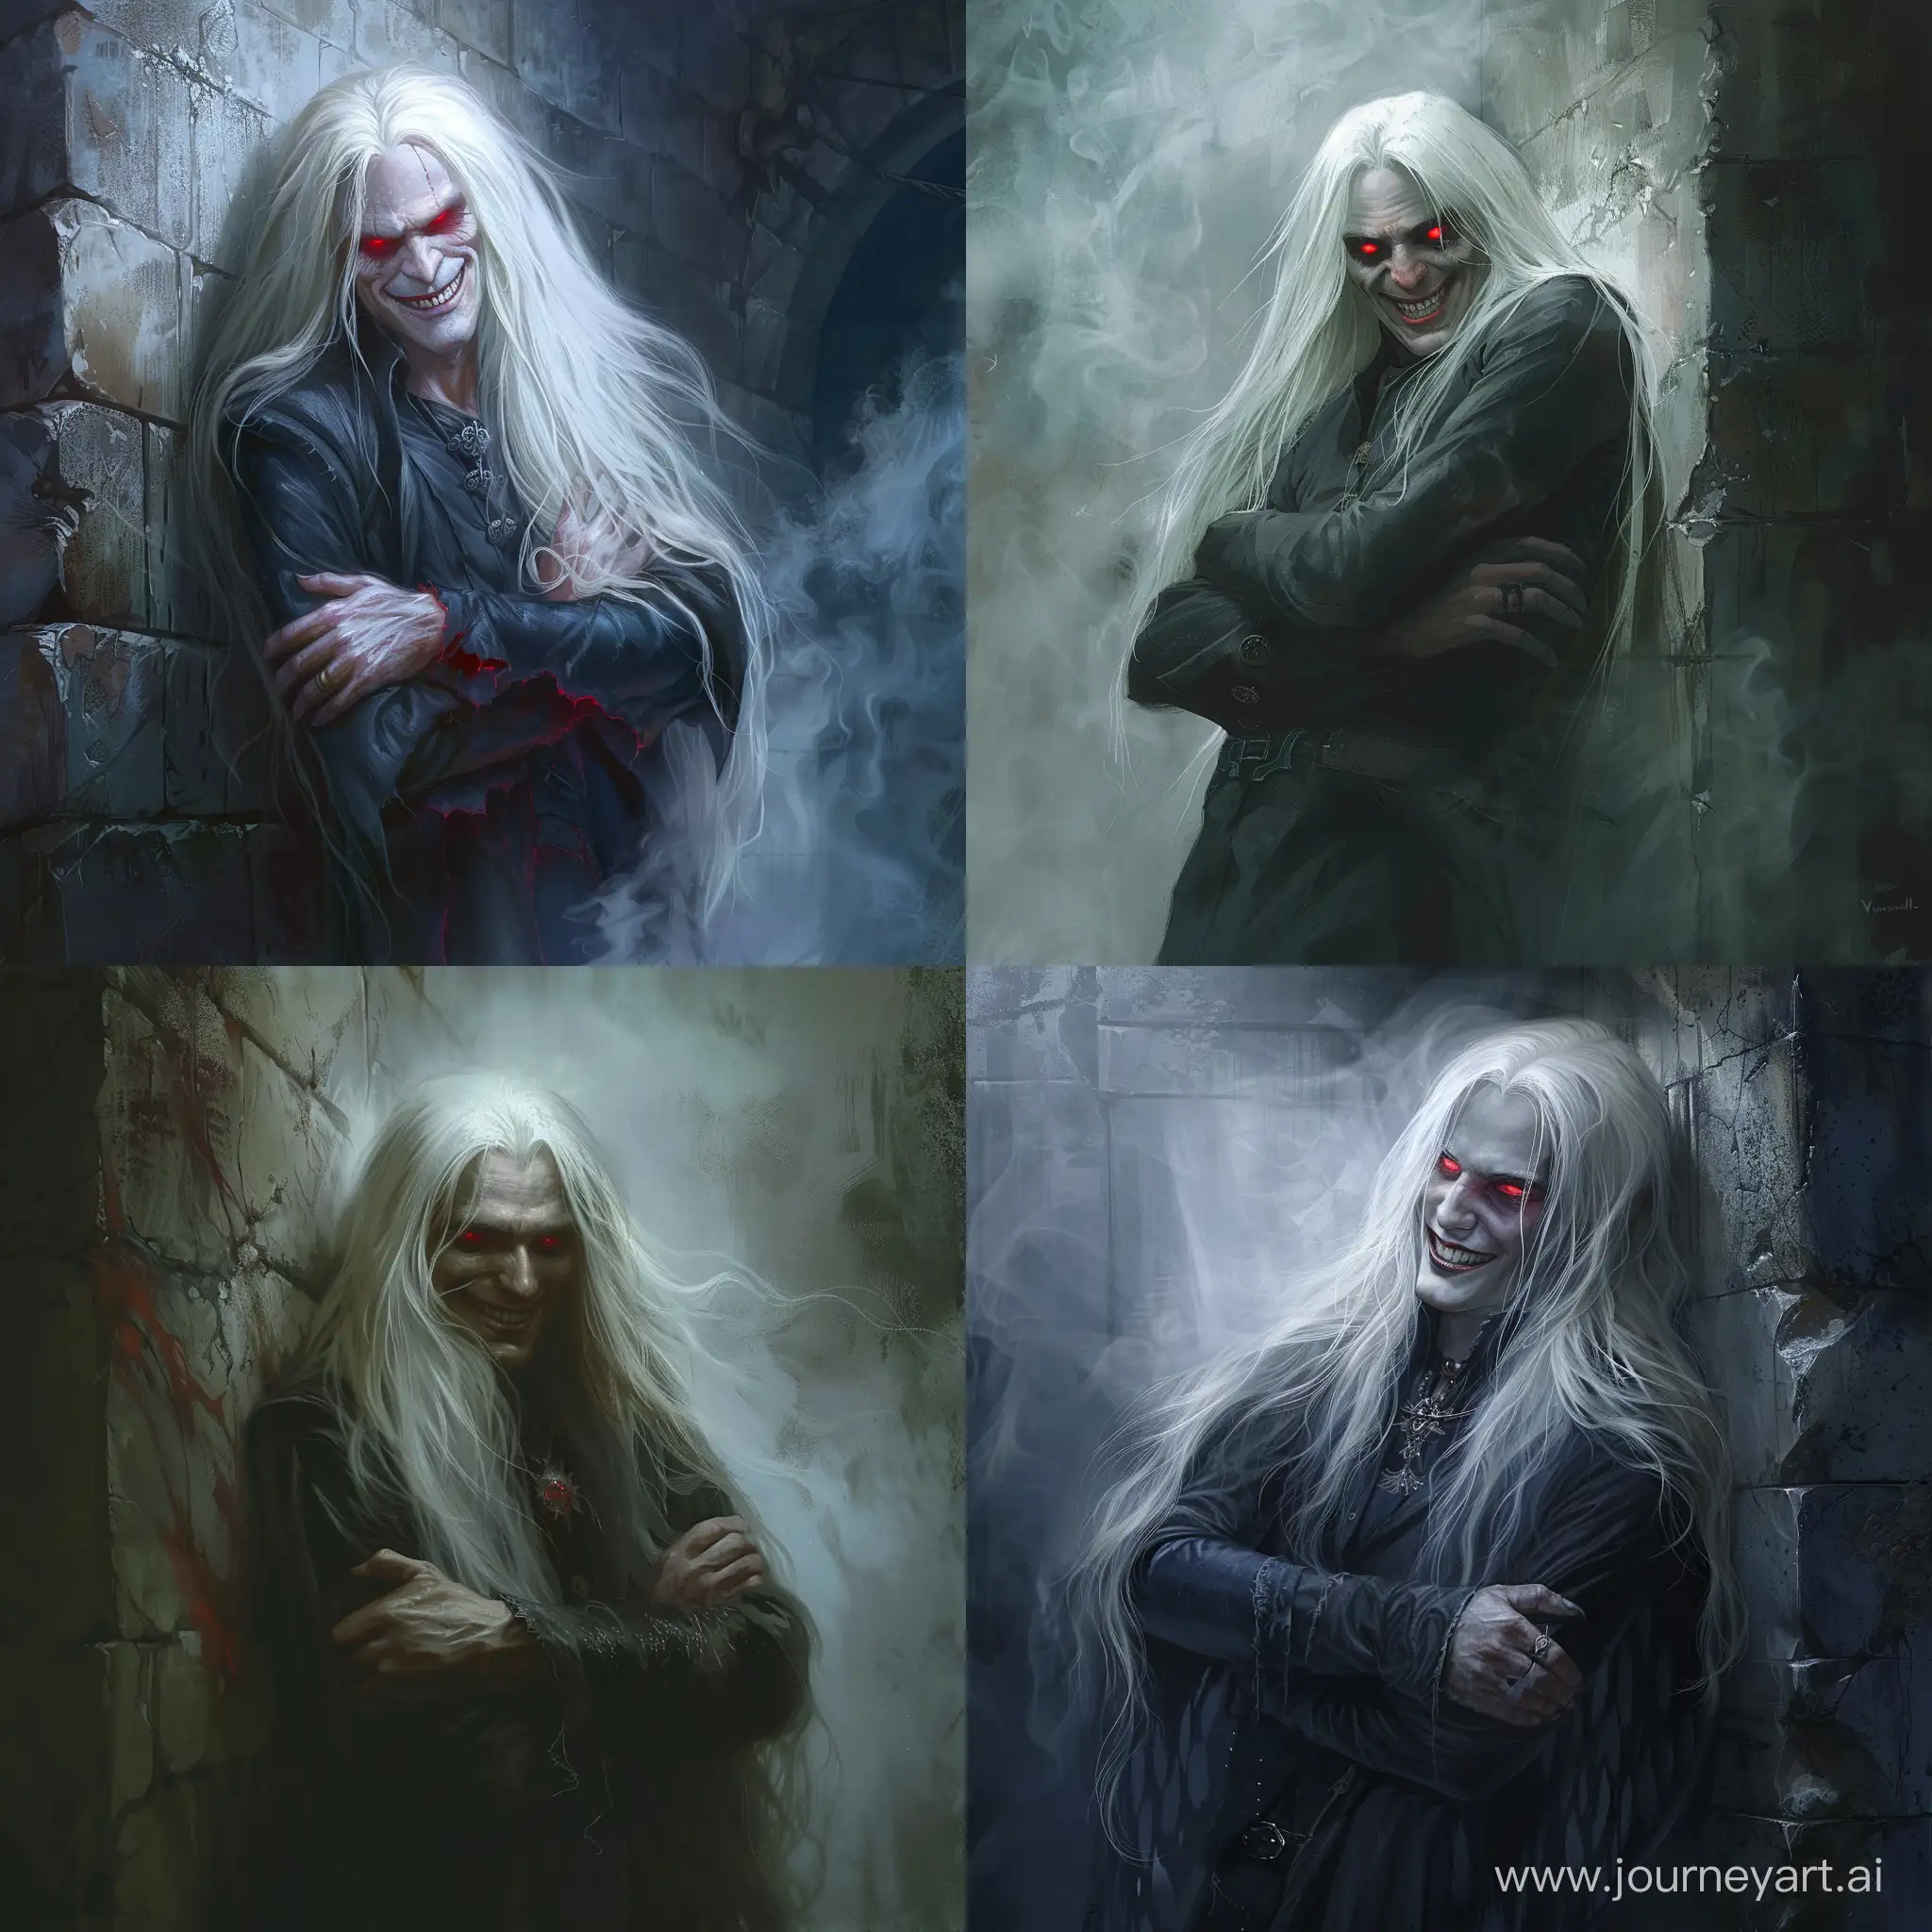 Mysterious-Vampire-with-White-Hair-in-Dark-Dungeon